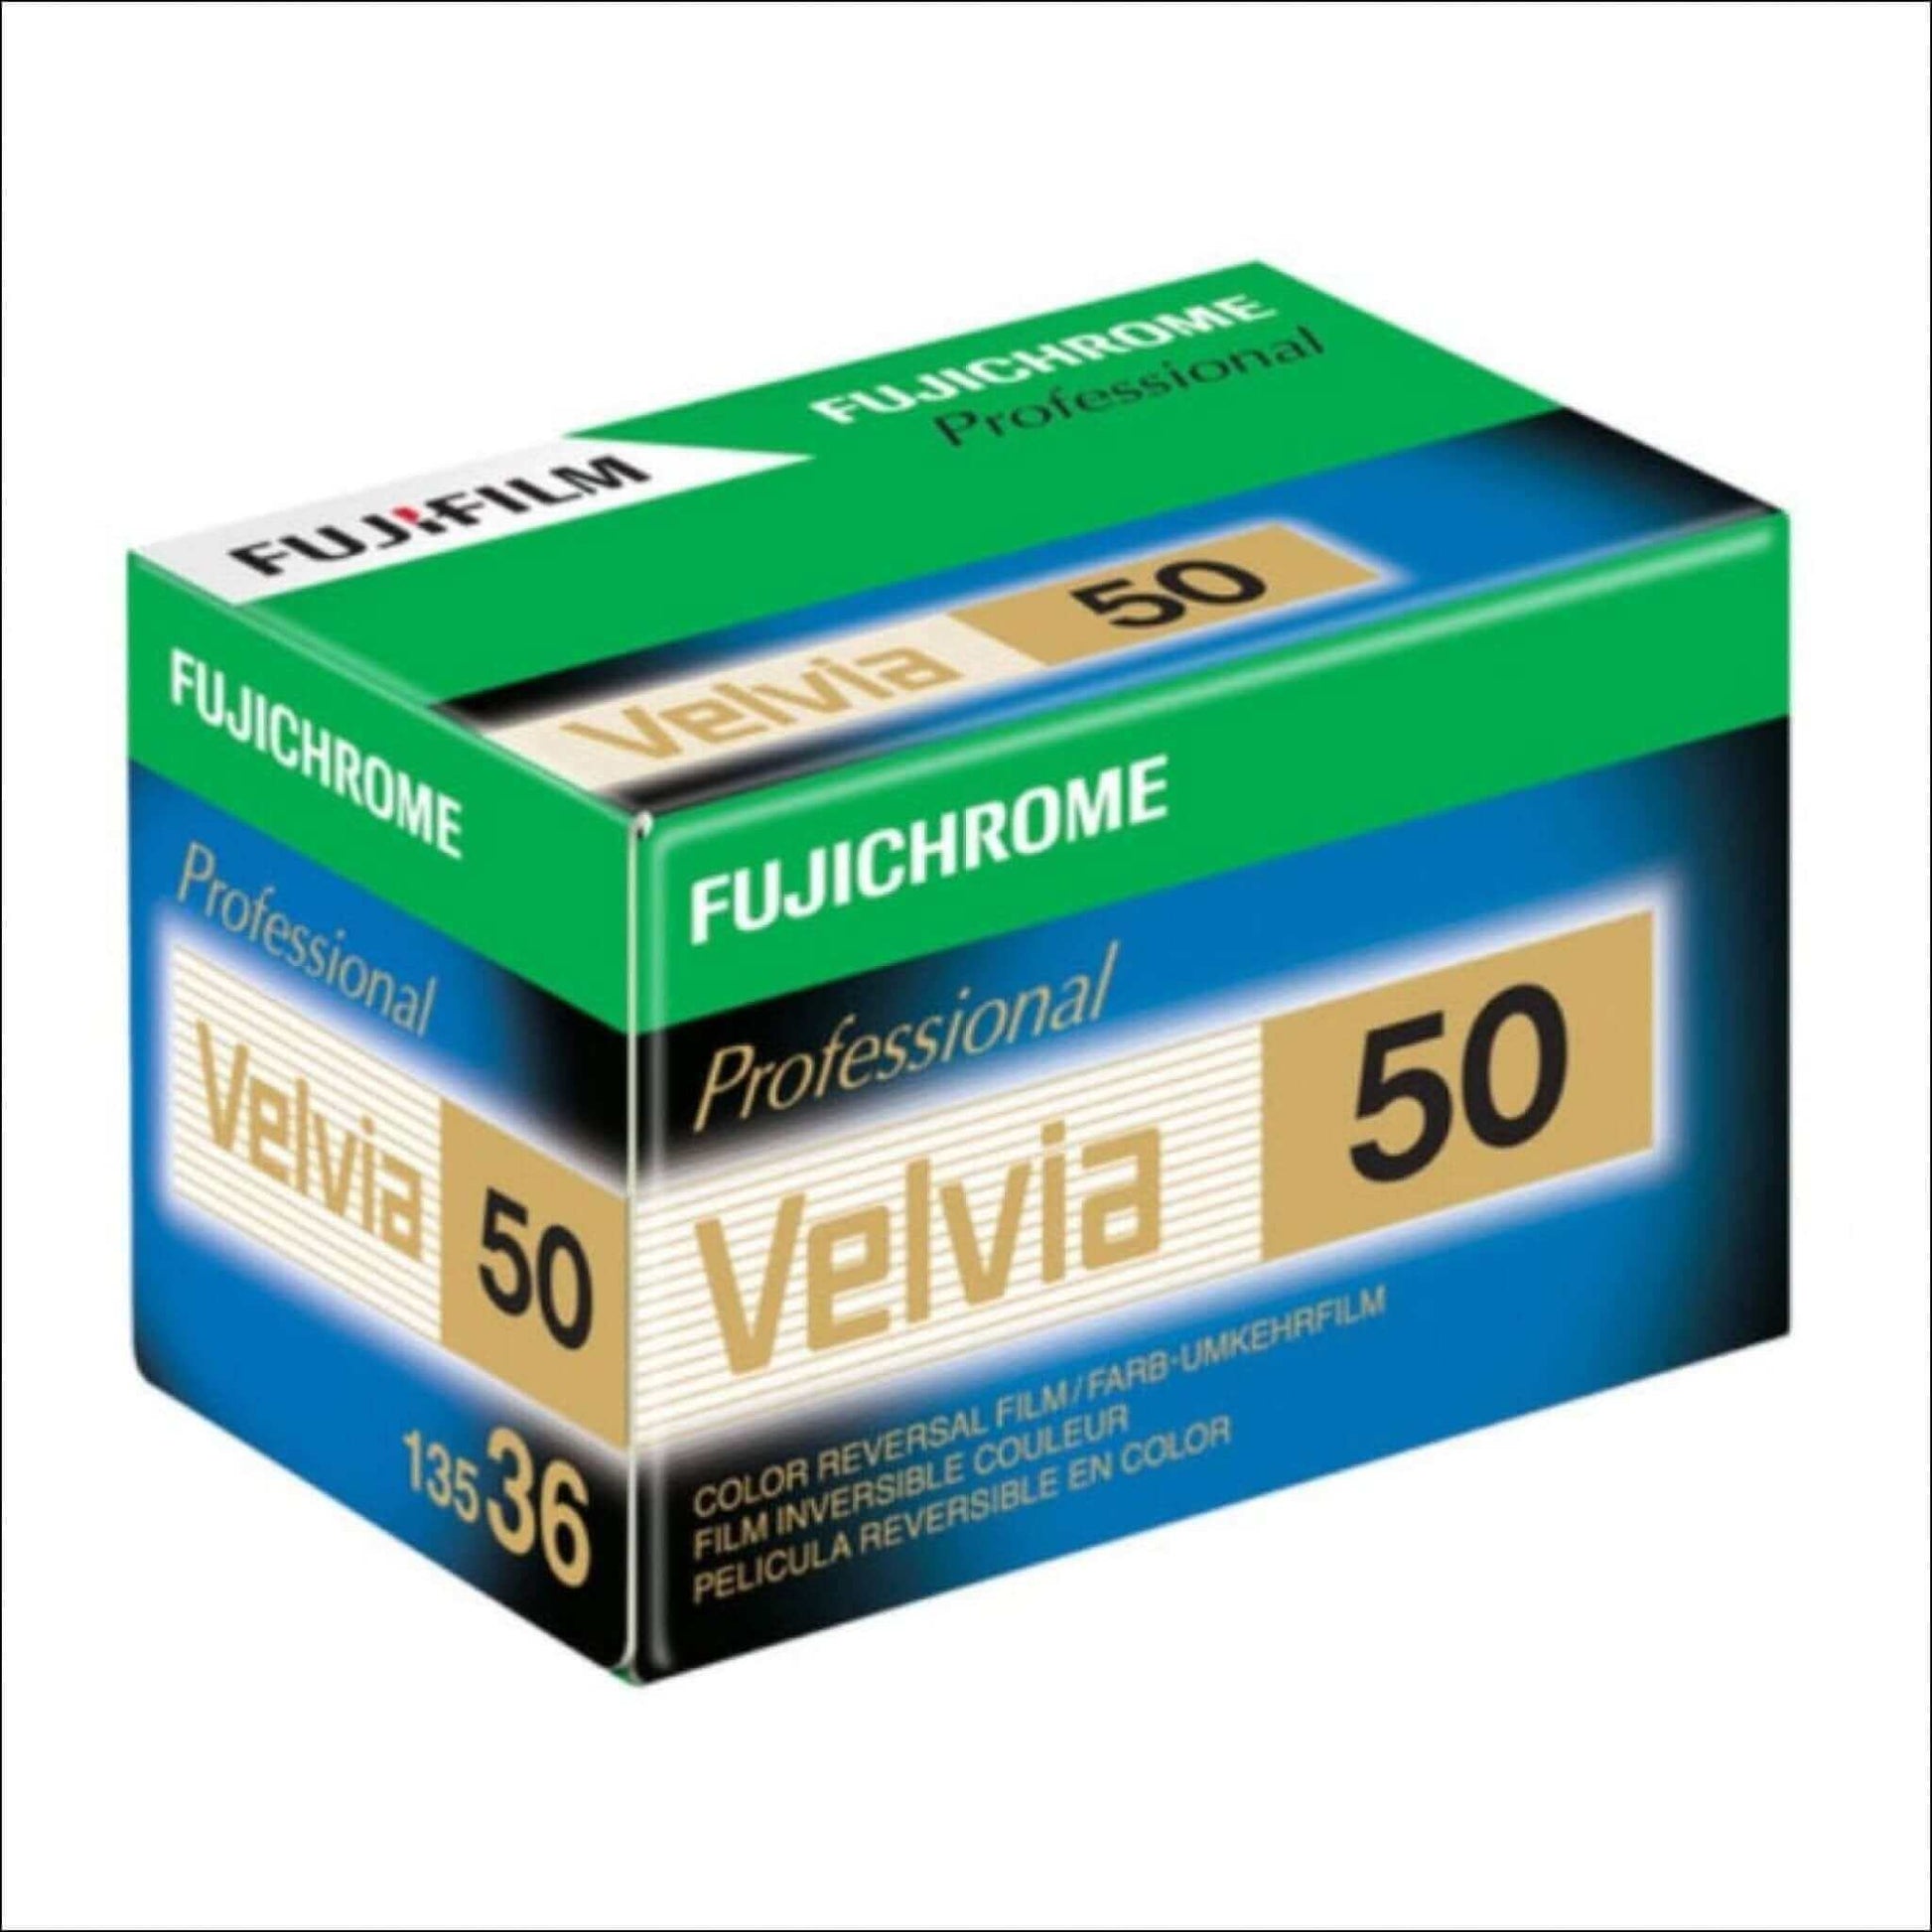 Fujifilm Fujichrome Professional Velvia 50 Color E6 Reversal